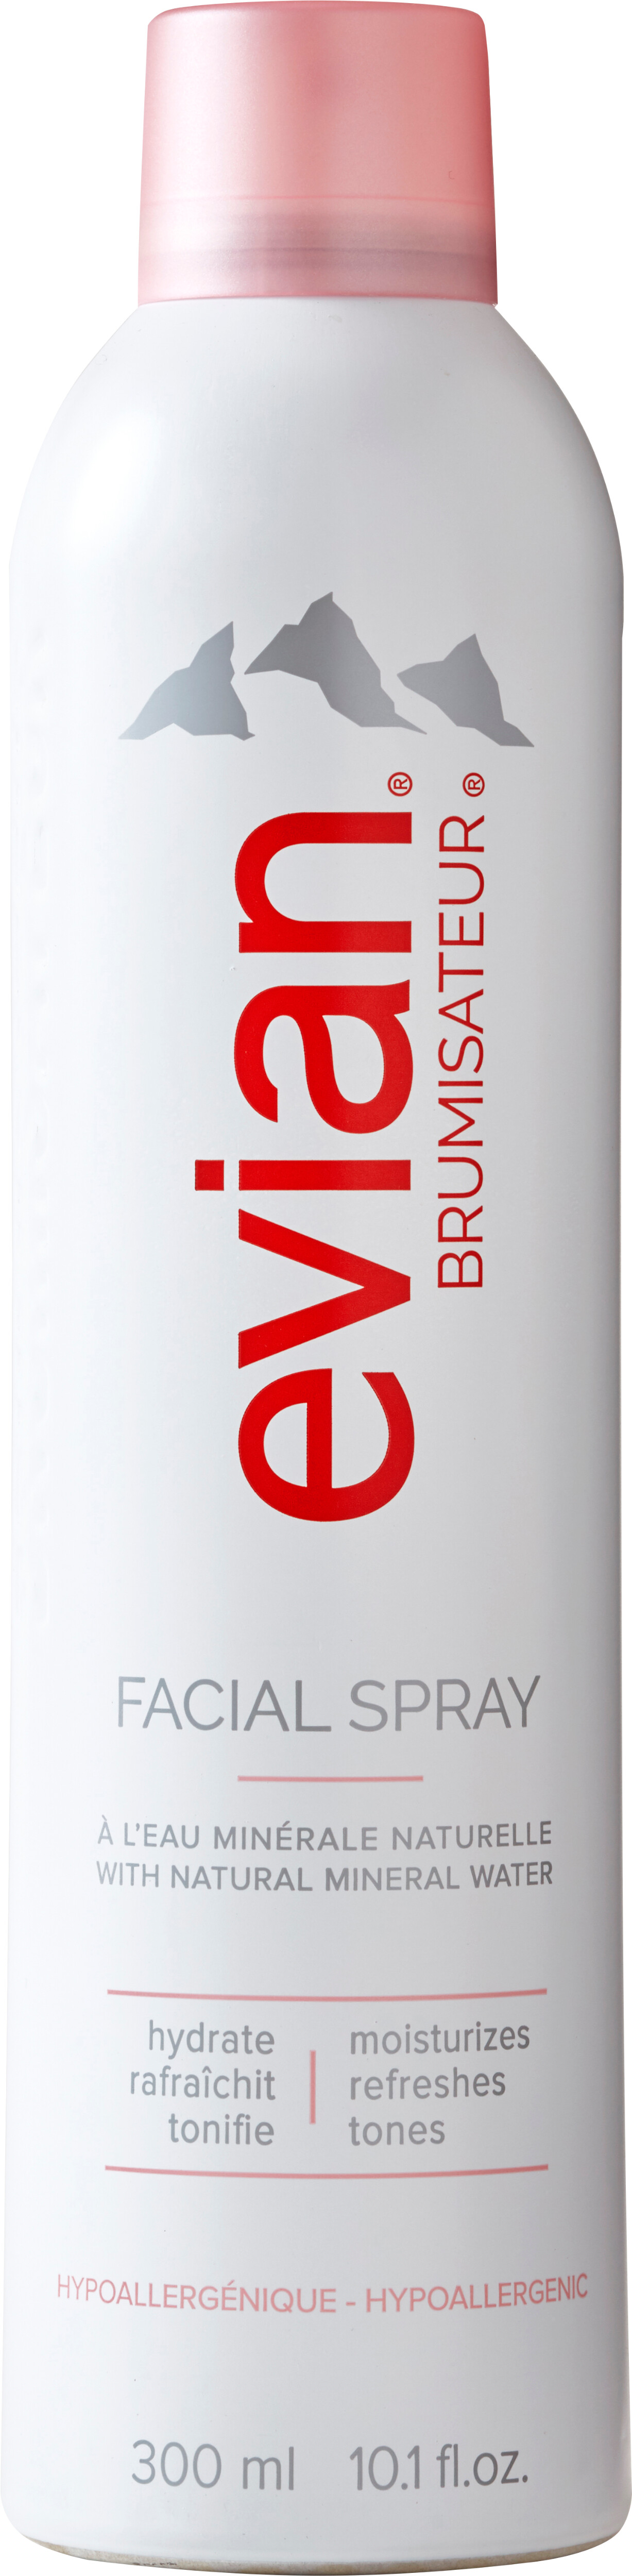 Evian Brumisateur Mineral Water Facial Spray 300ml